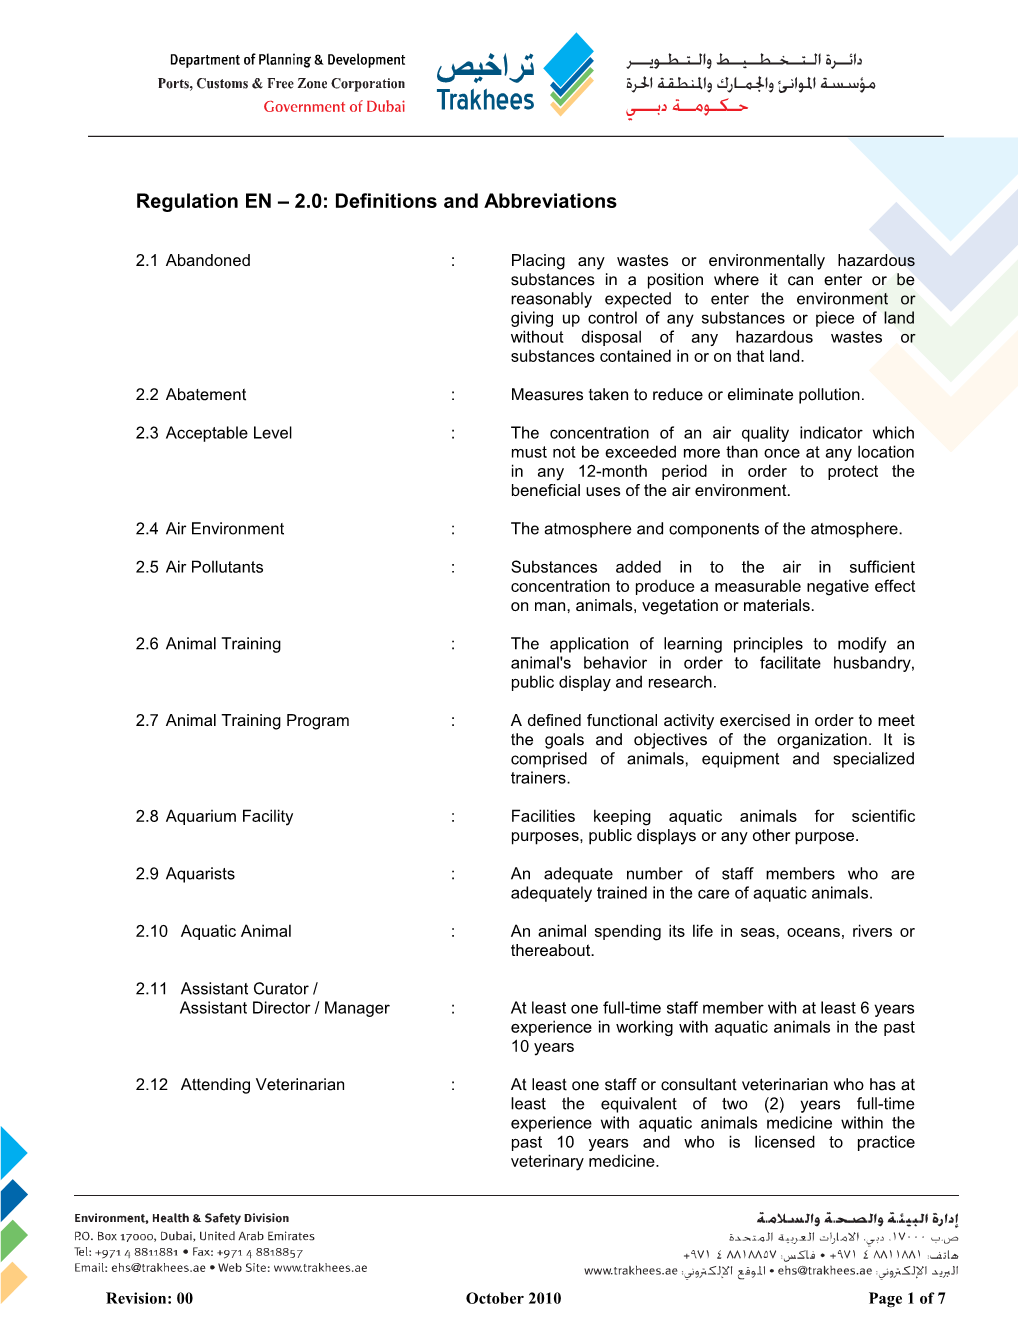 Regulation EN- 2.0 Definitions and Abbreviations